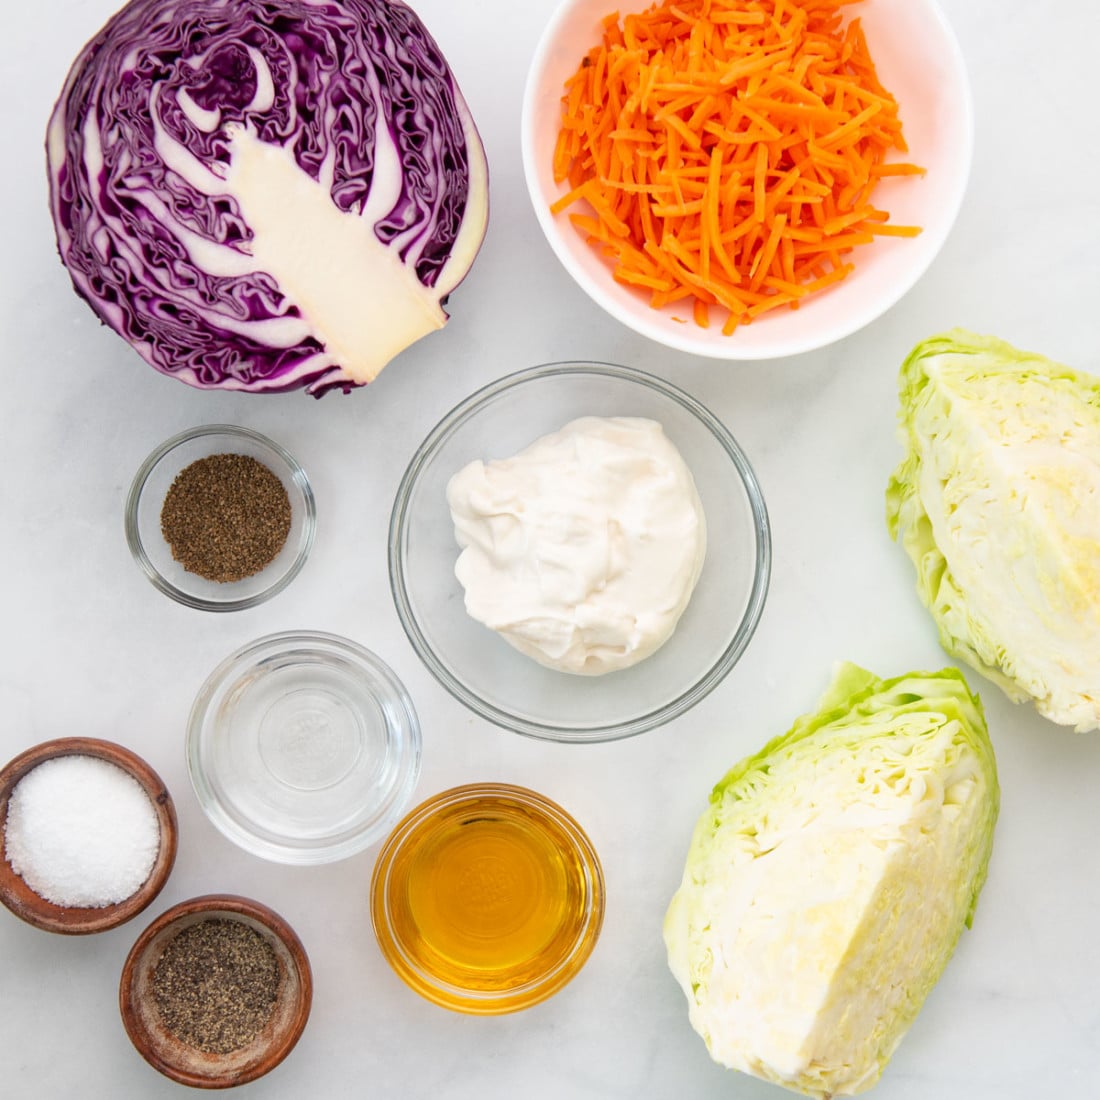 cabbage, carrots, plant-based mayo, seasonings, vinegar